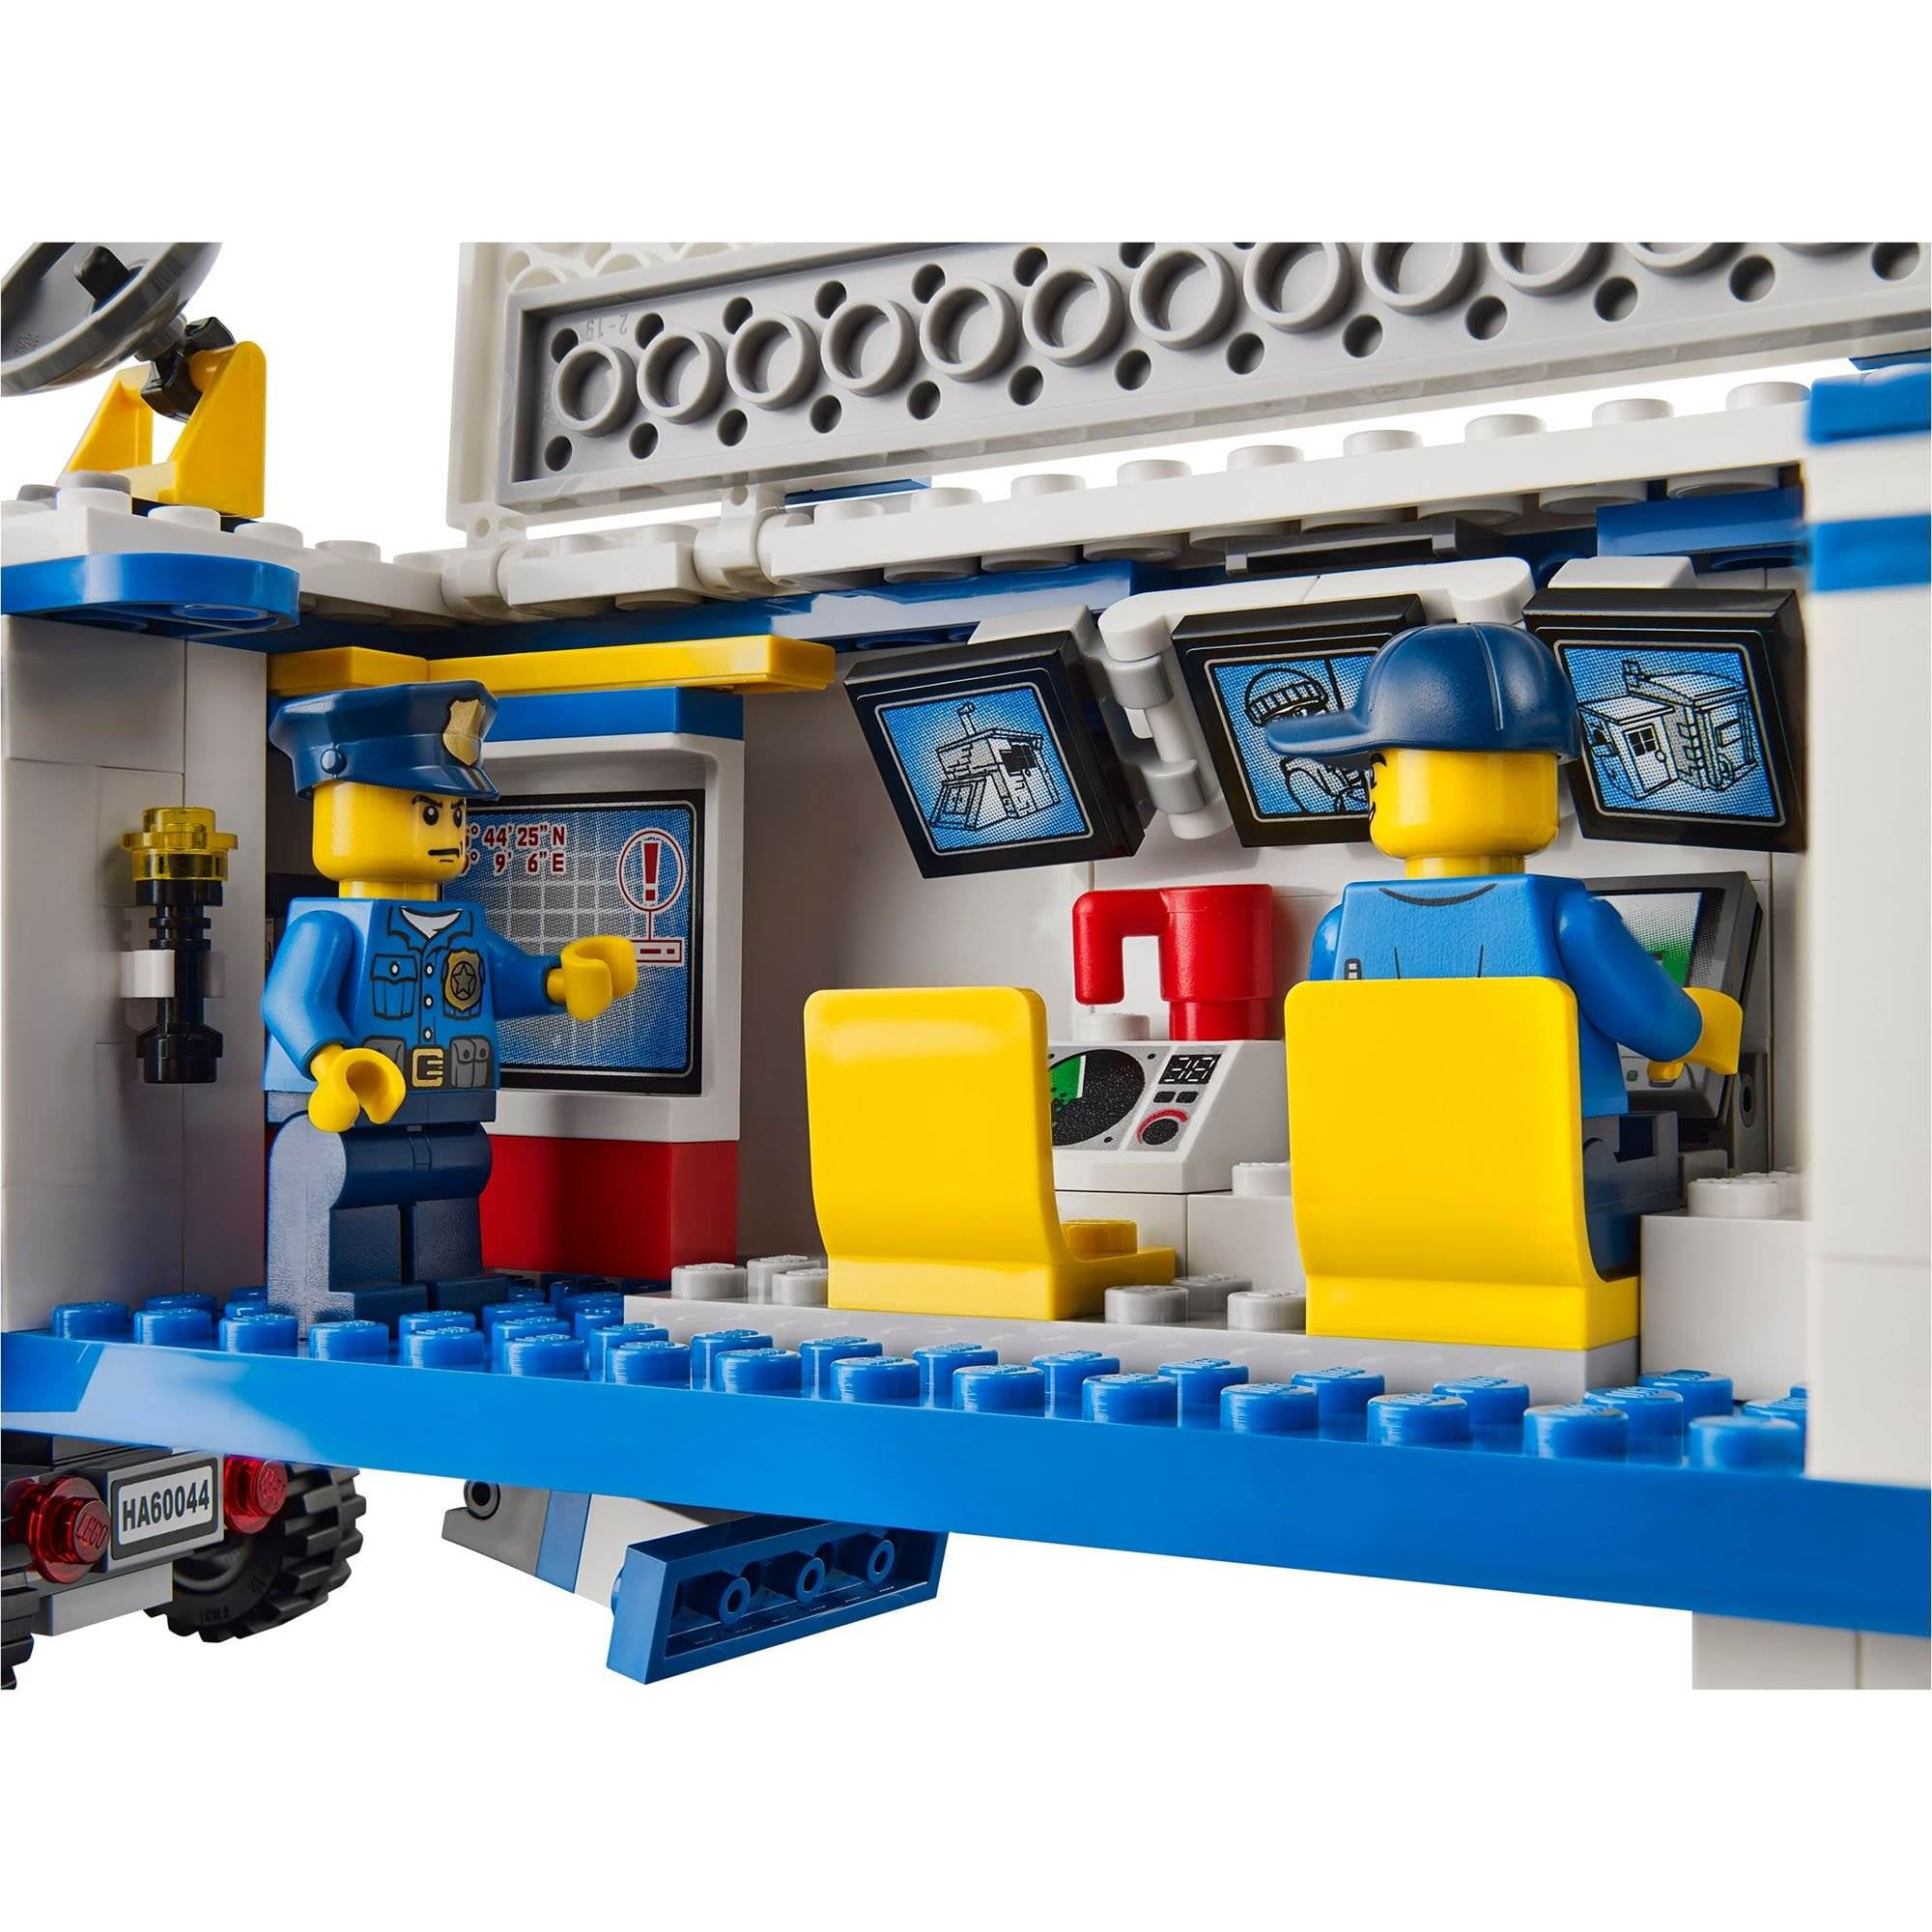 LEGO City Mobile Police Unit Building Set - Walmart.com